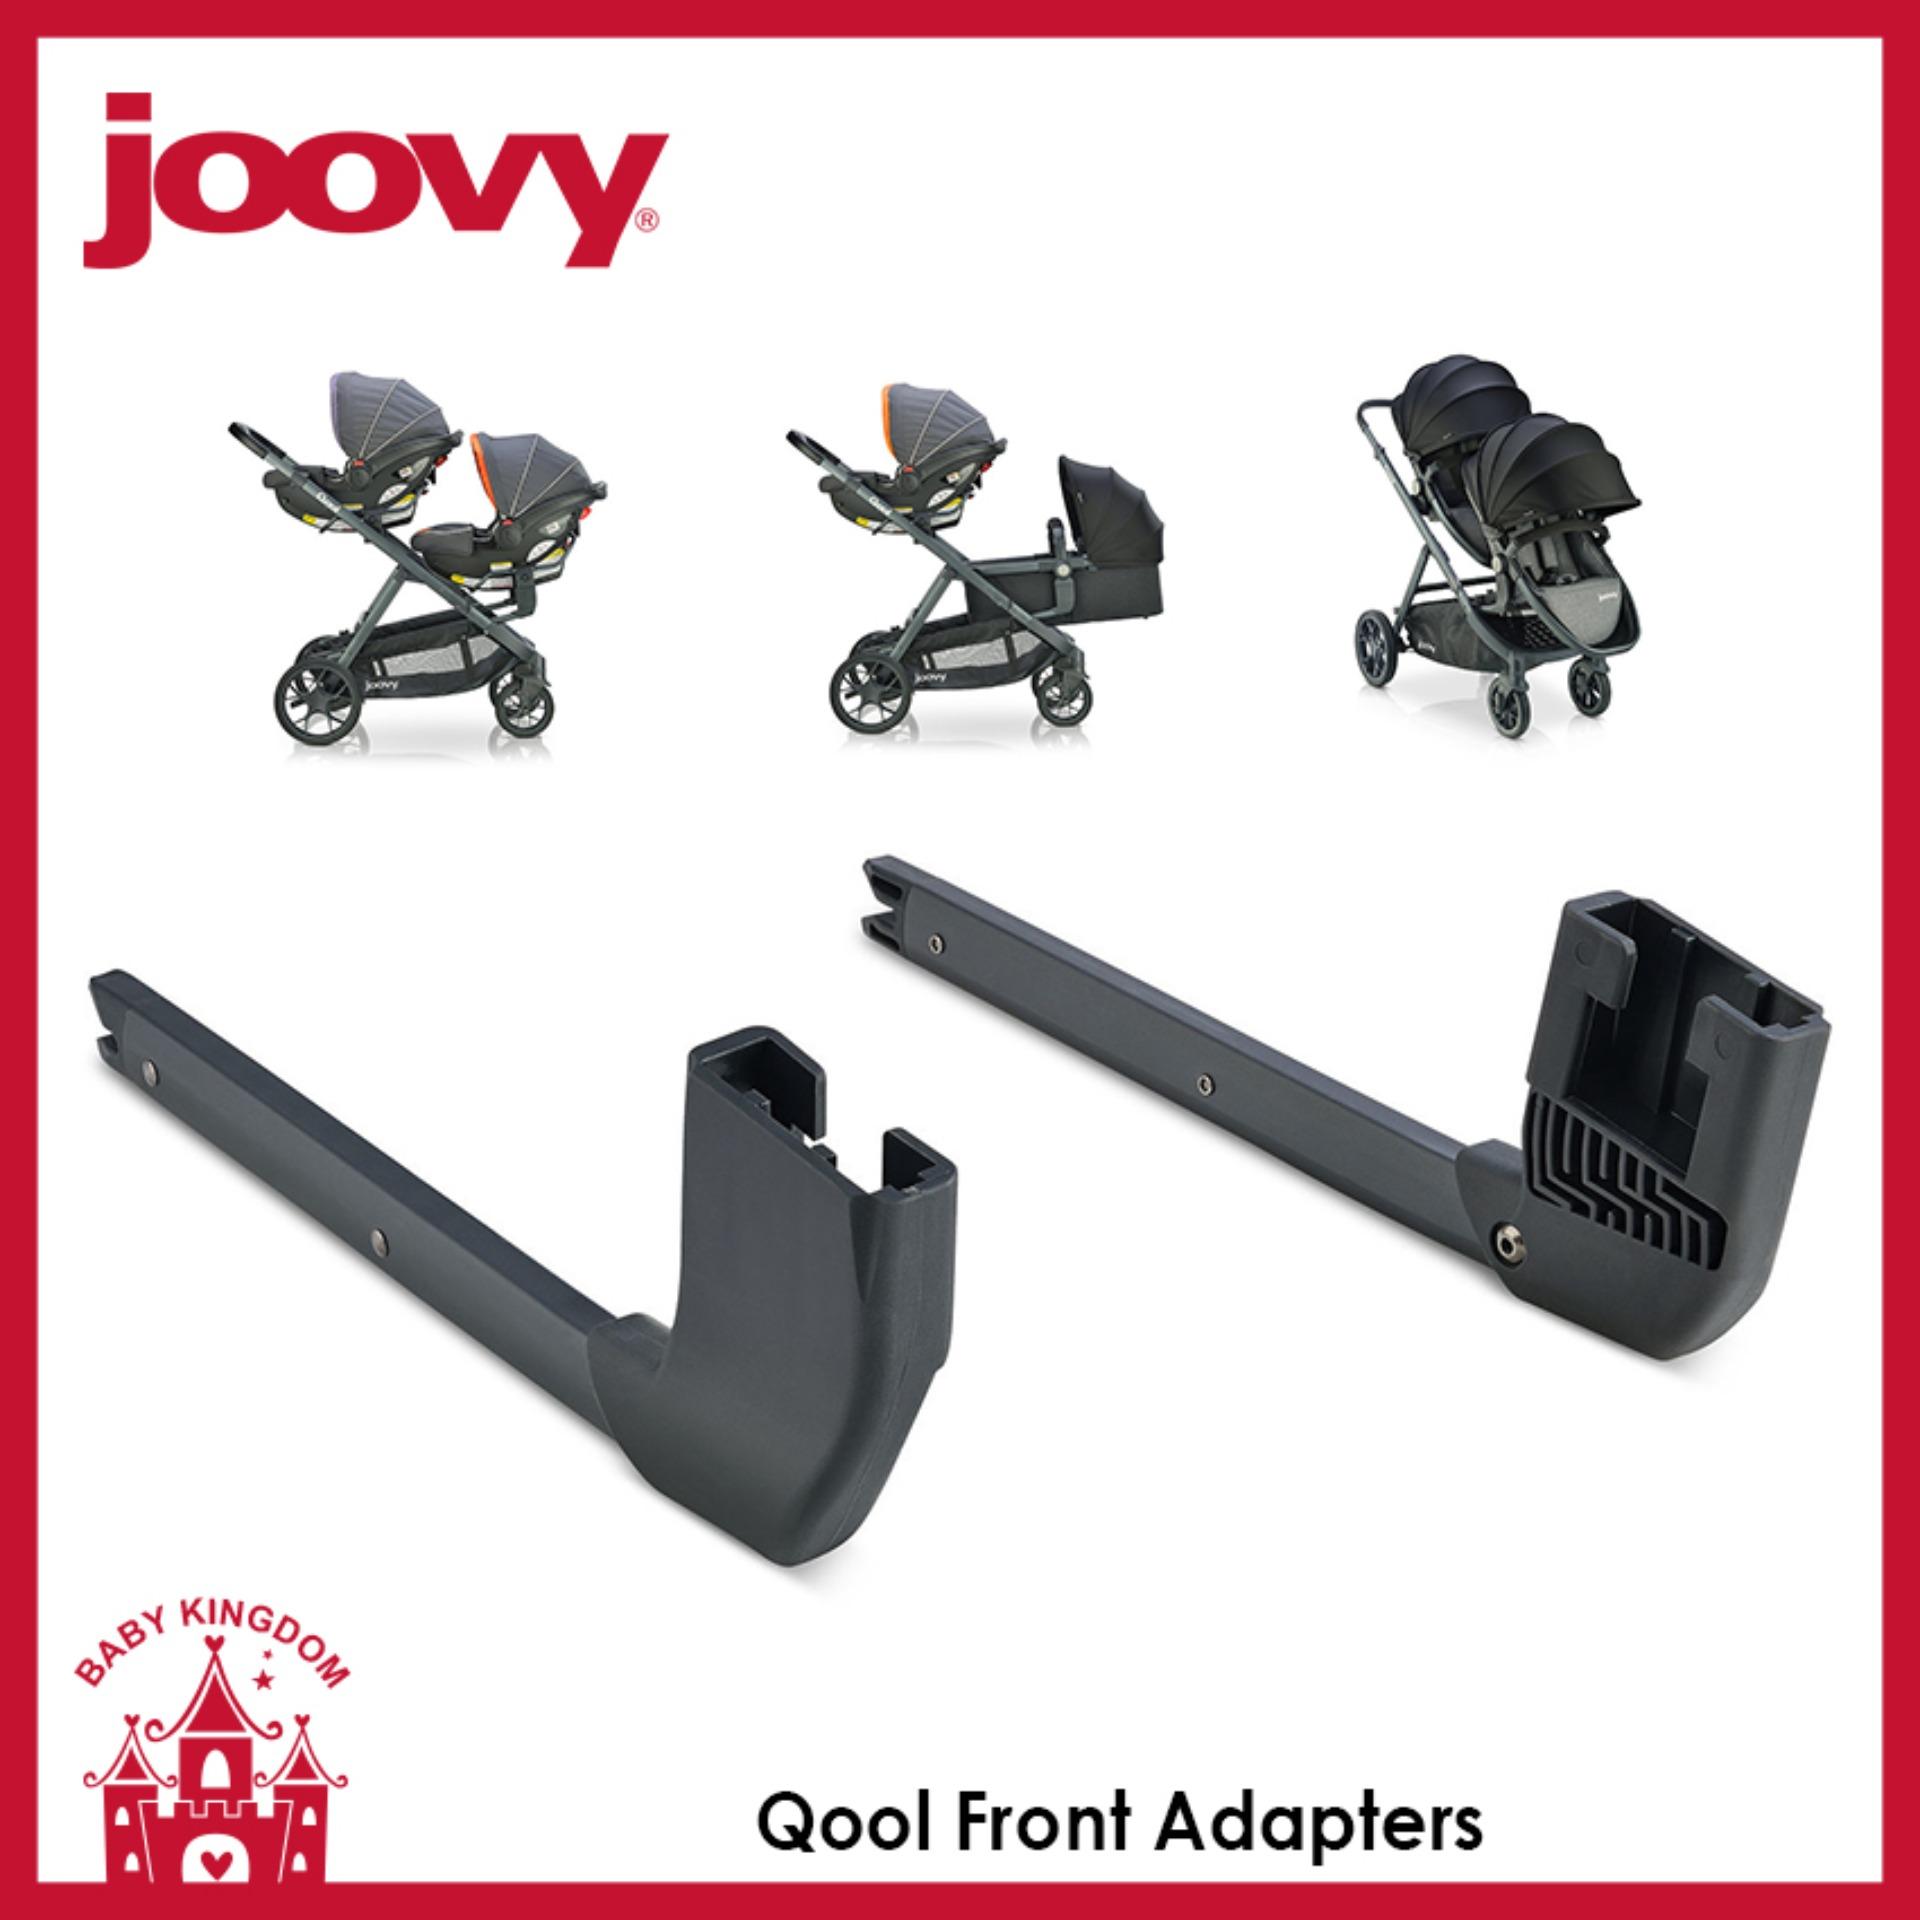 joovy qool front adapters